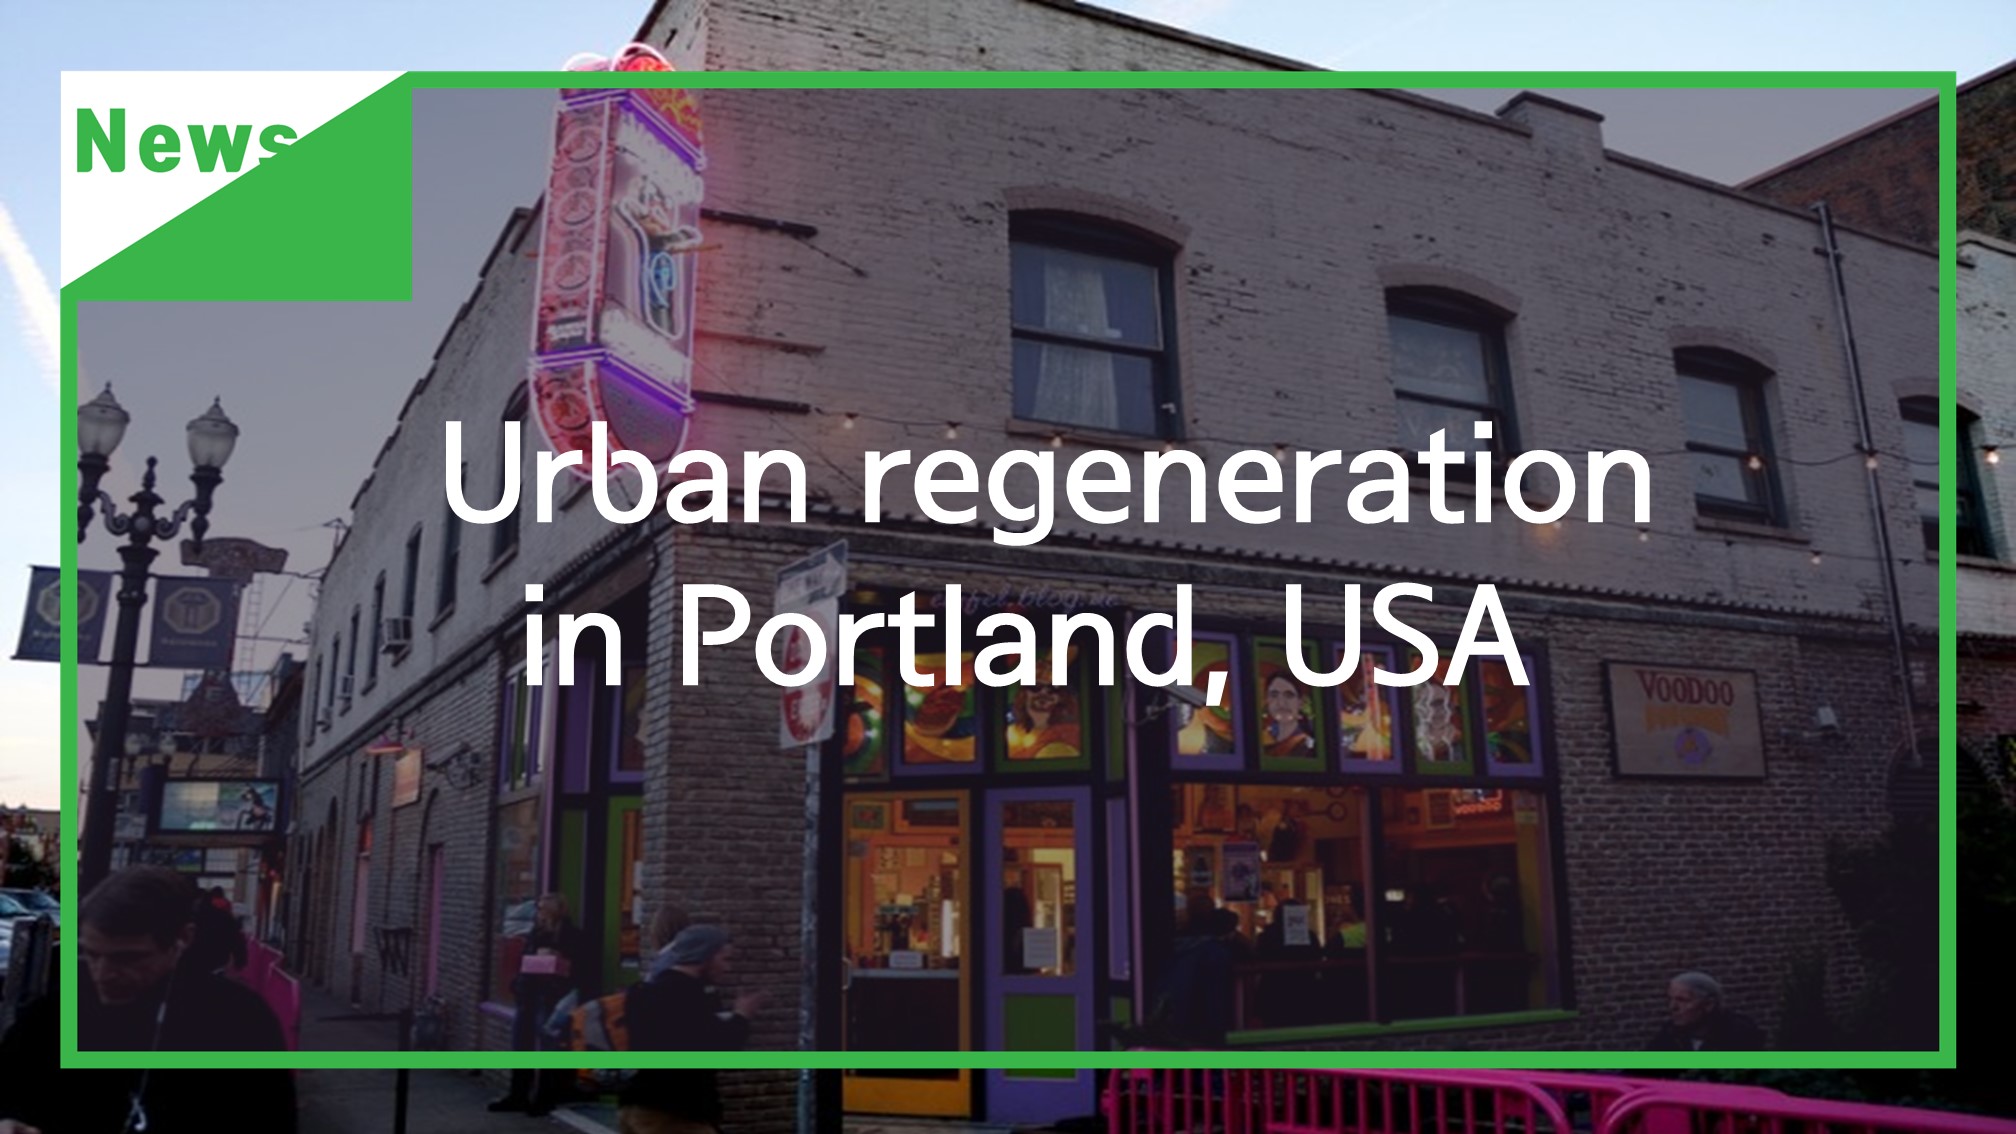 [News] Urban regeneration in Portland